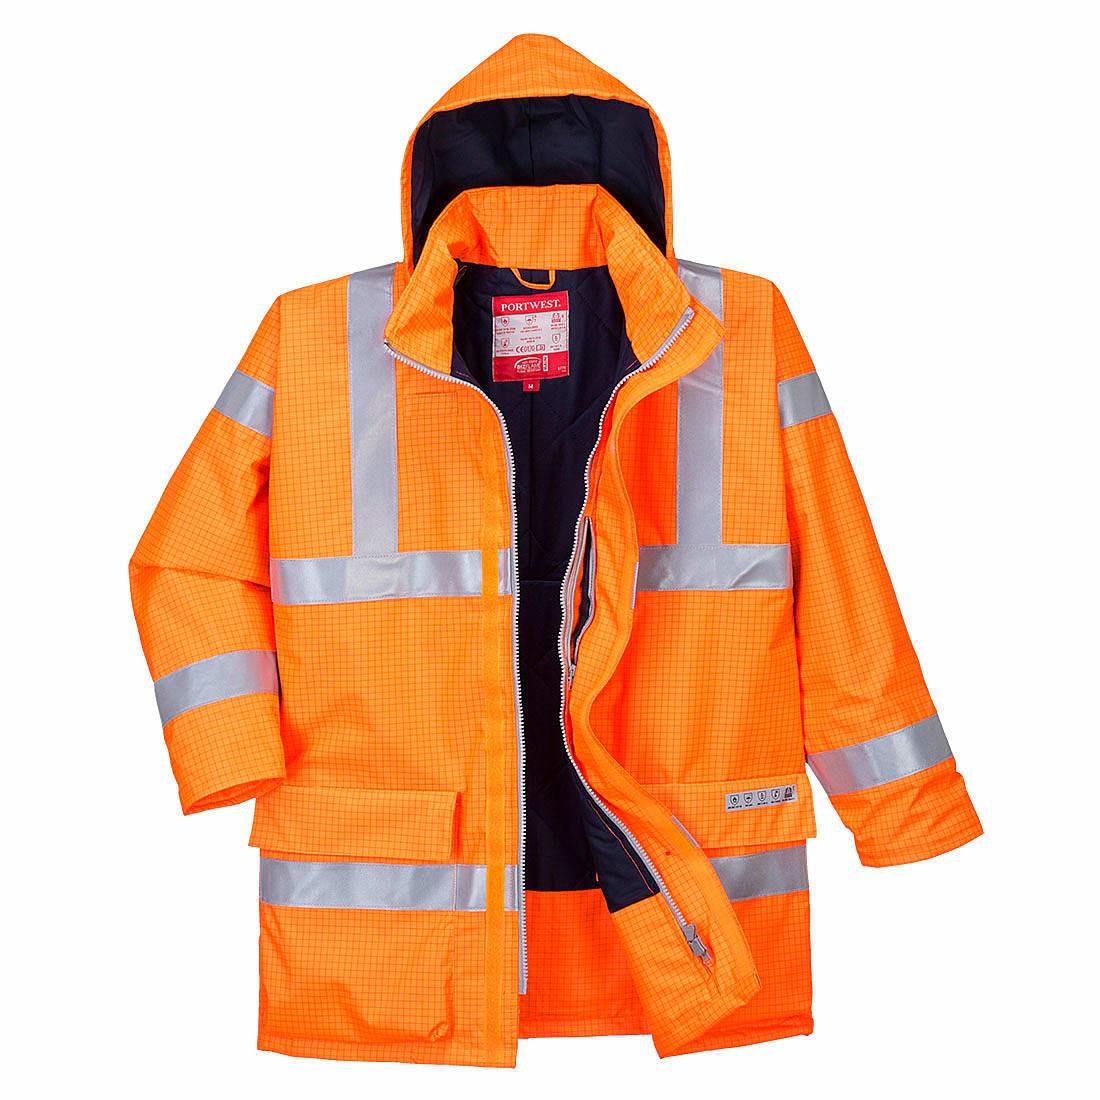 Portwest Bizflame Rain Hi-Viz Antistatic FR Jacket in Orange (Product Code: S778)